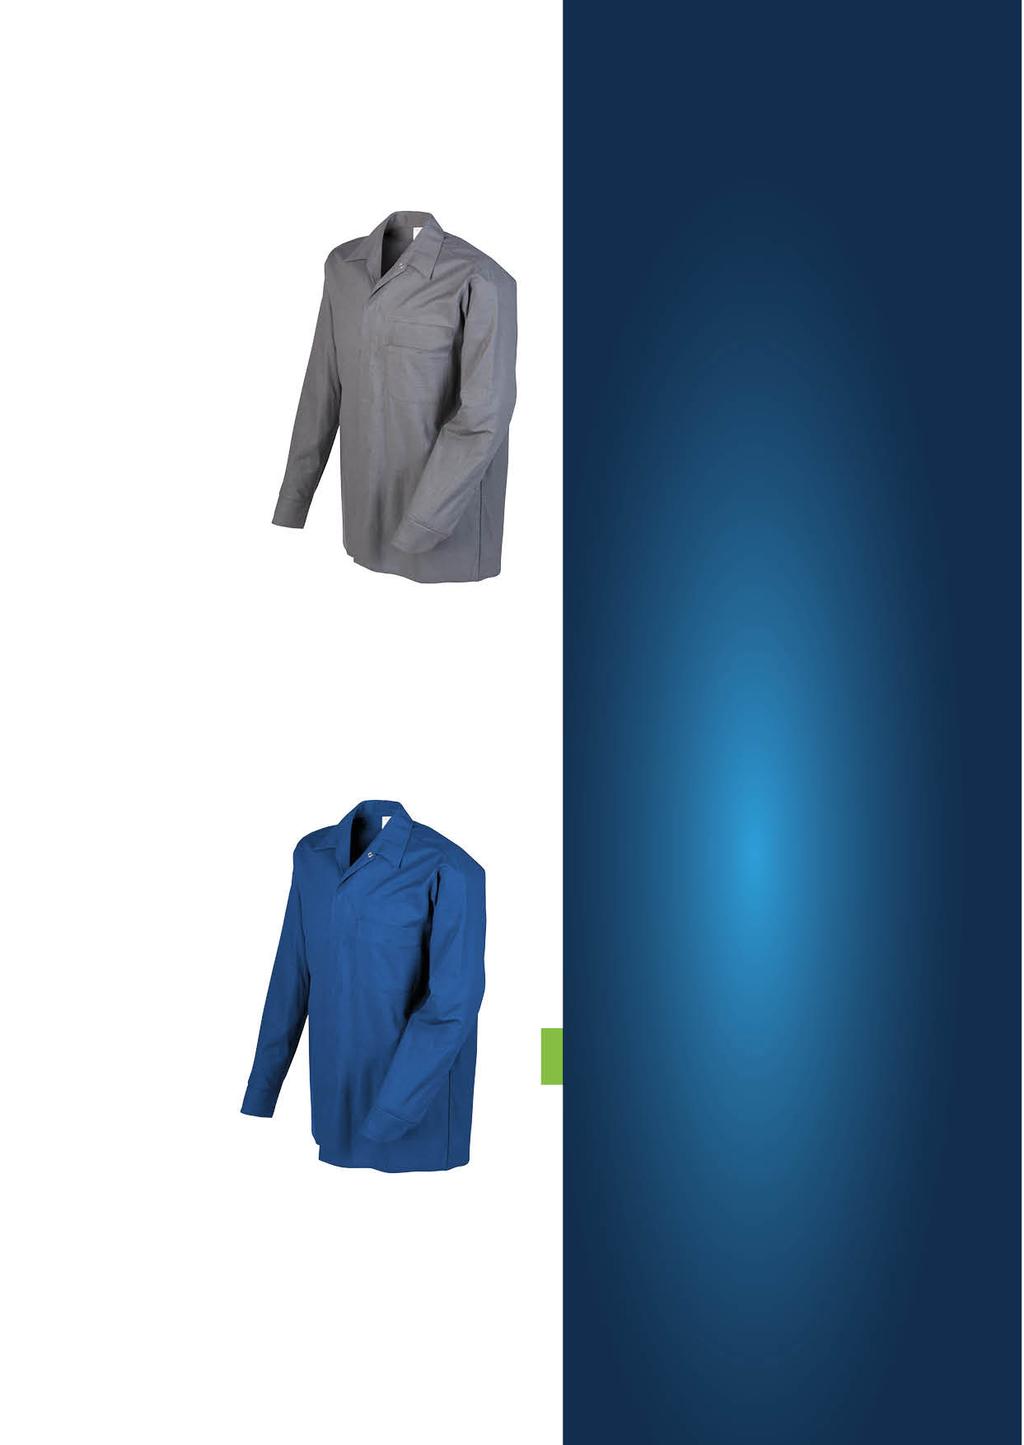 PSAHemden PSAKleidergrößen Körpermaßtabelle: für jeden das richtige Maß. Hemd 1 4 EN ISO 11612 A1/A2 B1 C1 F1 EN 1149-5 Klasse 1 Farbe 498 grau Art.